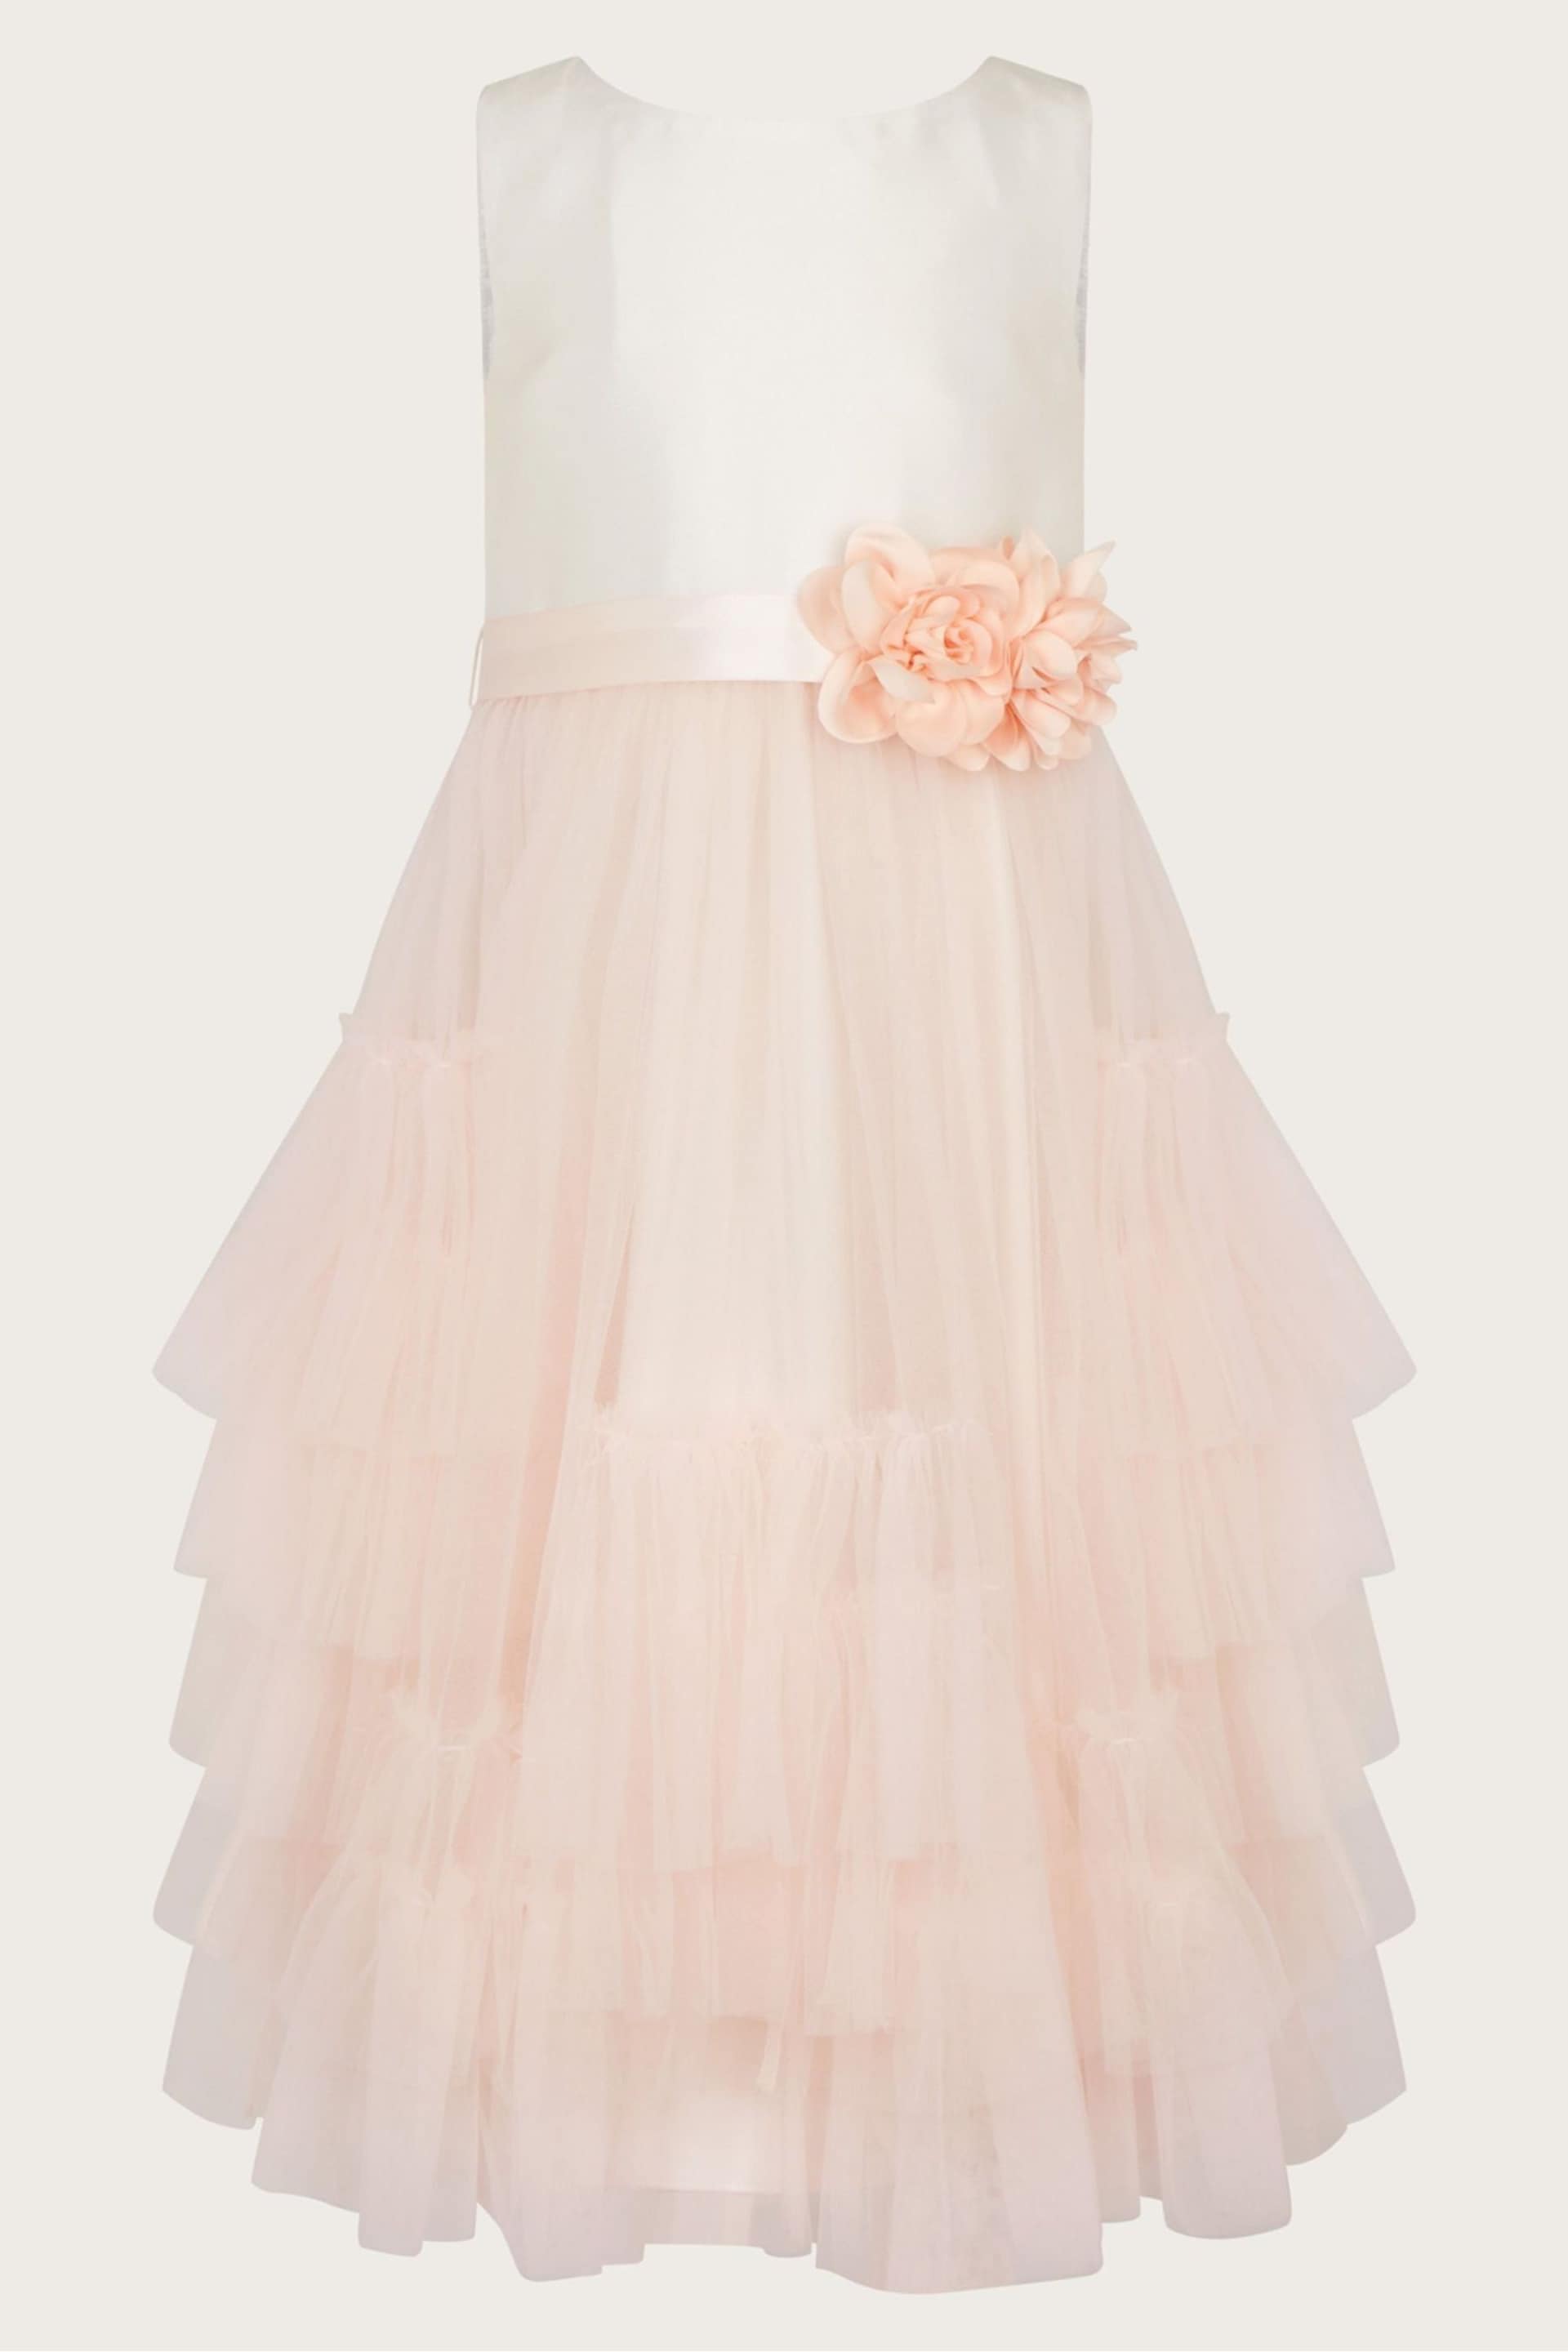 Monsoon Pink Sofia Ruffle Dress - Image 1 of 3